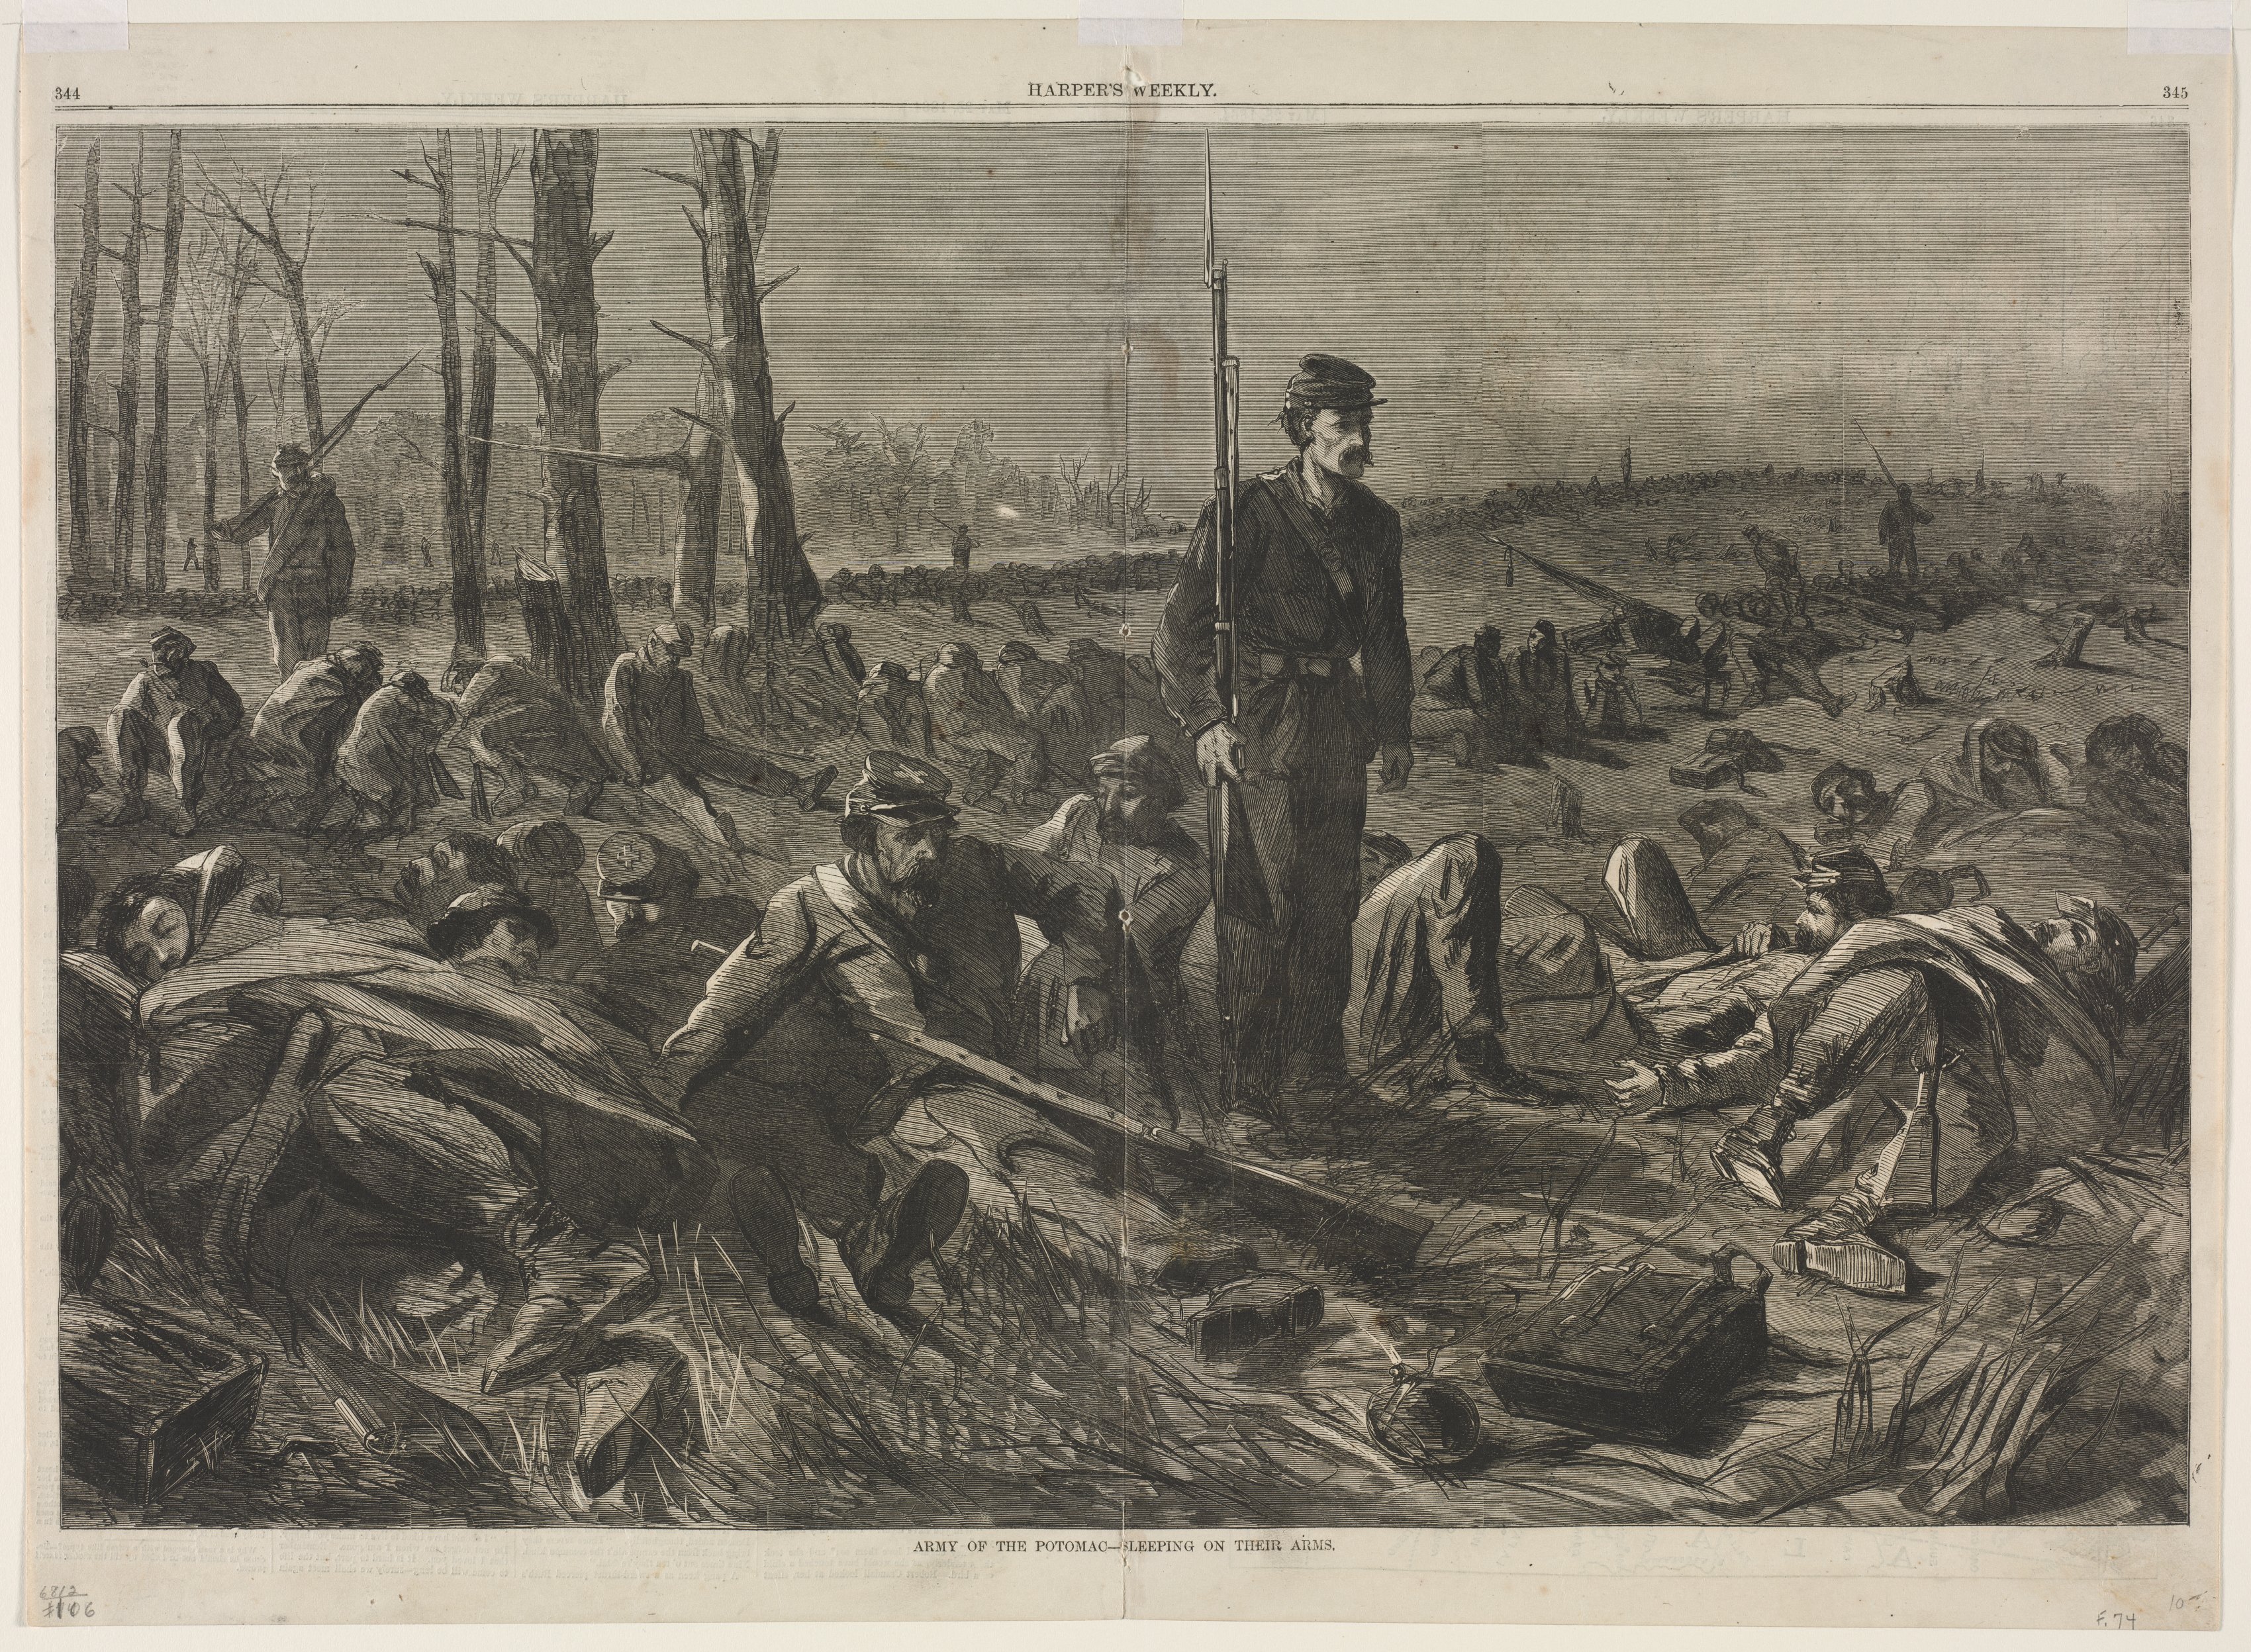 Army of othe Potomac - Sleeping on Their Arms